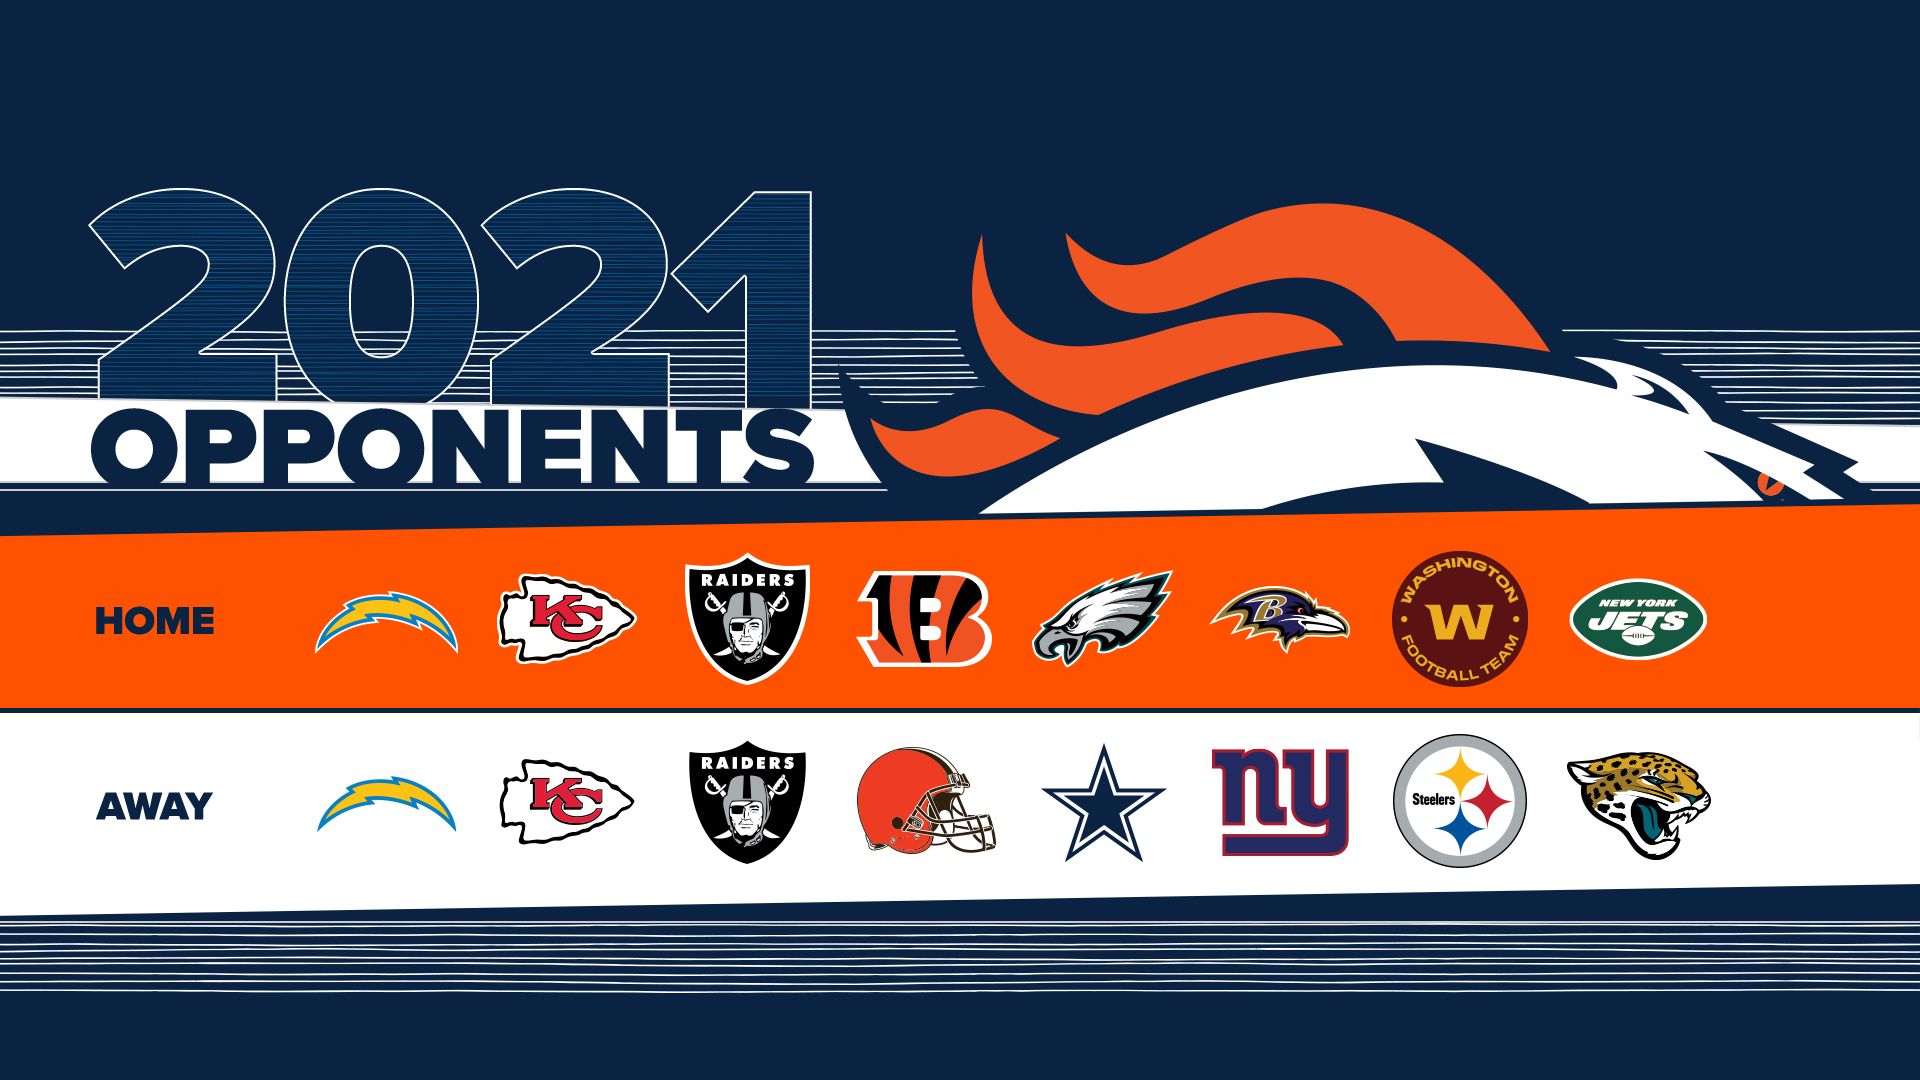 2022-2023 Denver Broncos Lock Screen Schedule for iPhone 6-7-8 Plus